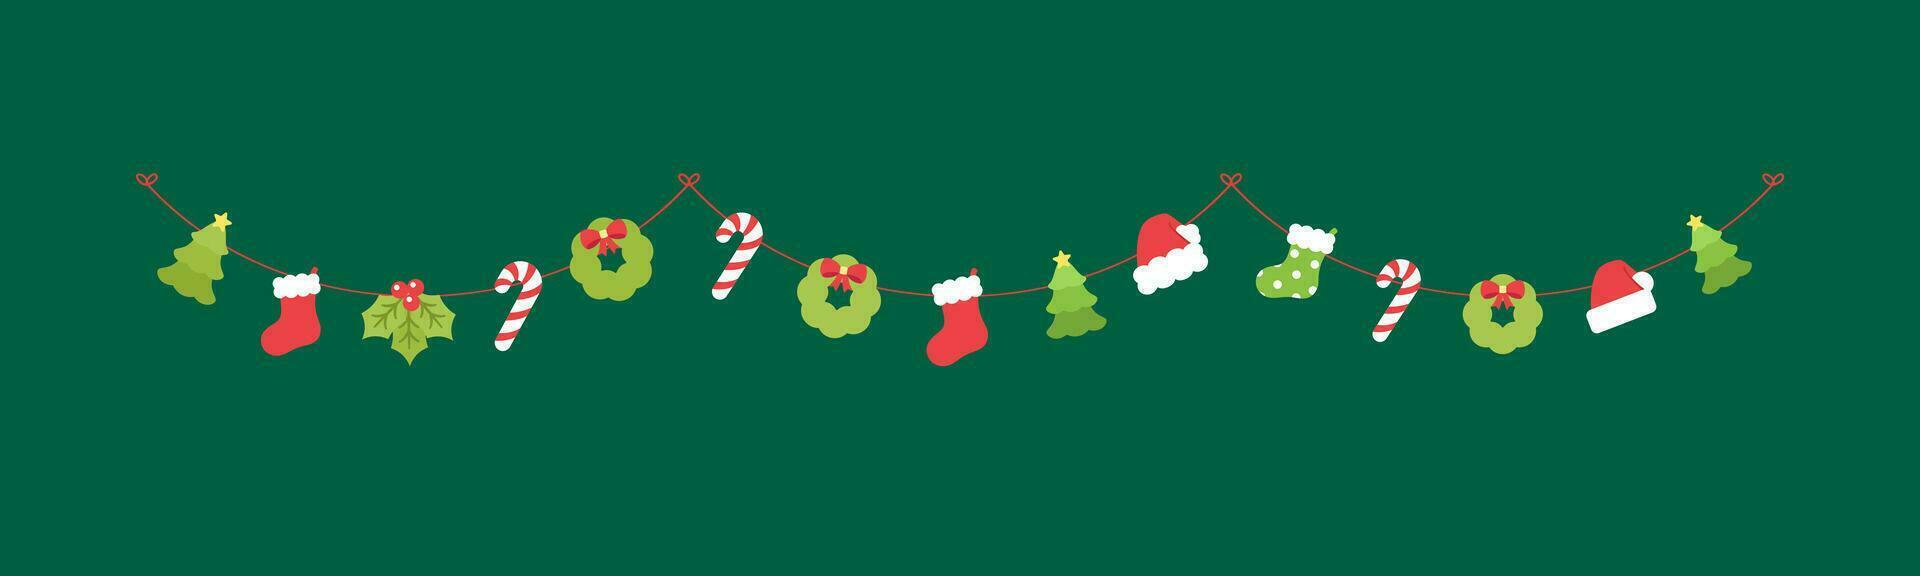 Christmas Garland Vector Illustration, Xmas Graphics Festive Winter Holiday Season Bunting